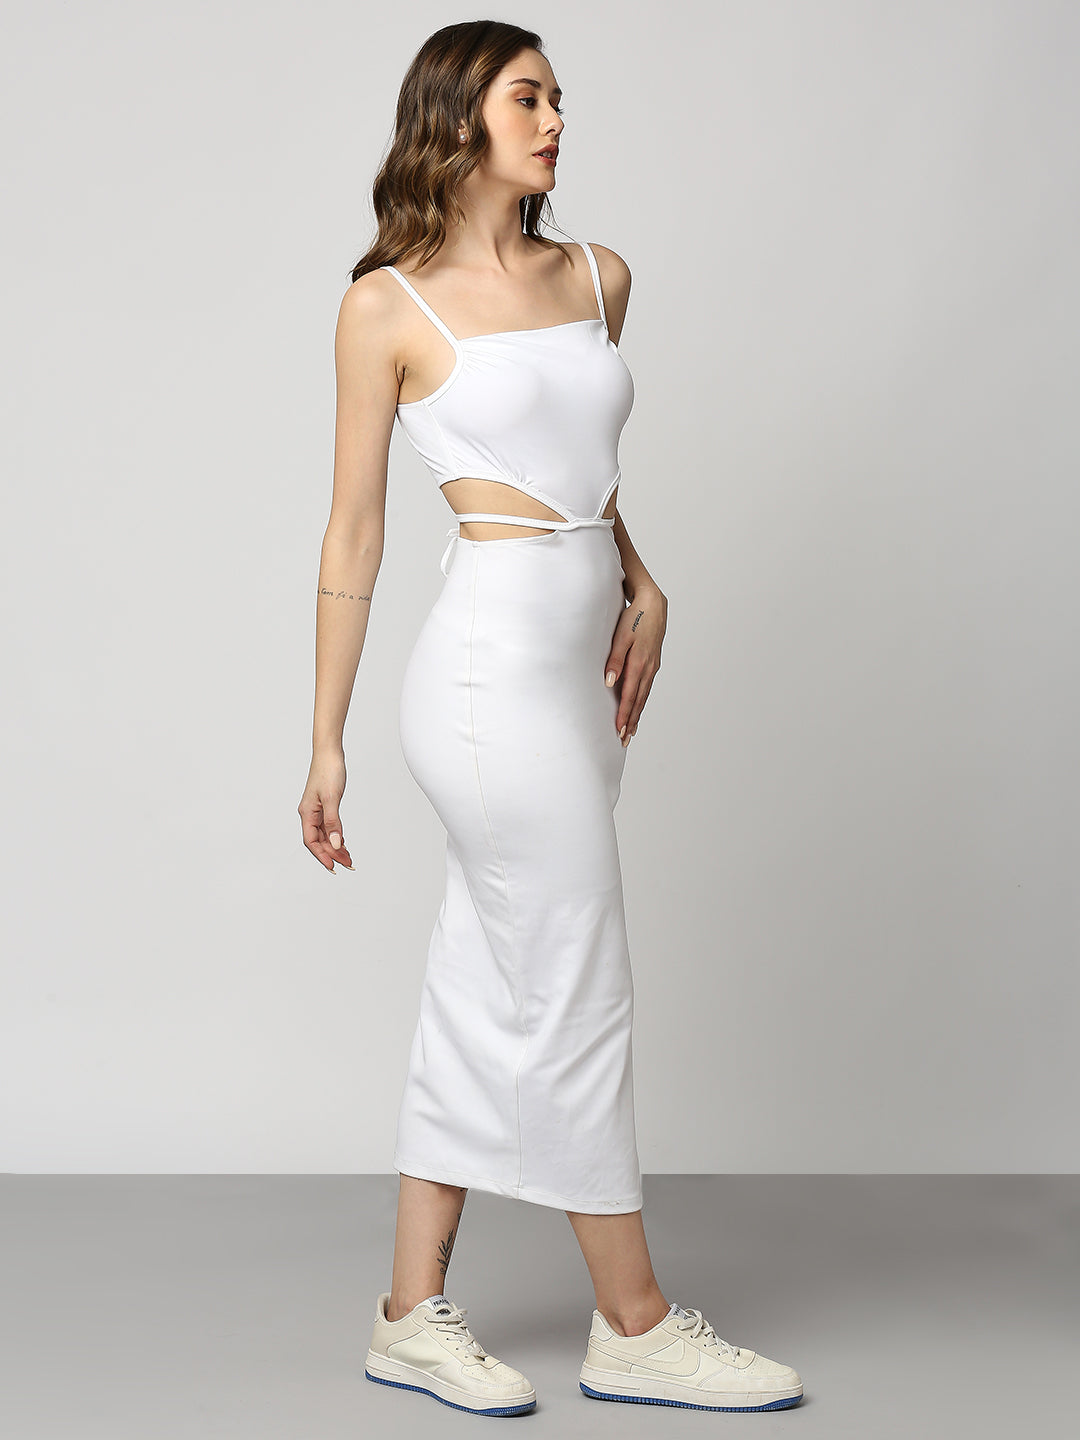 Disrupt Women Cut-out Strappy White Slim Fit Stylish Dress